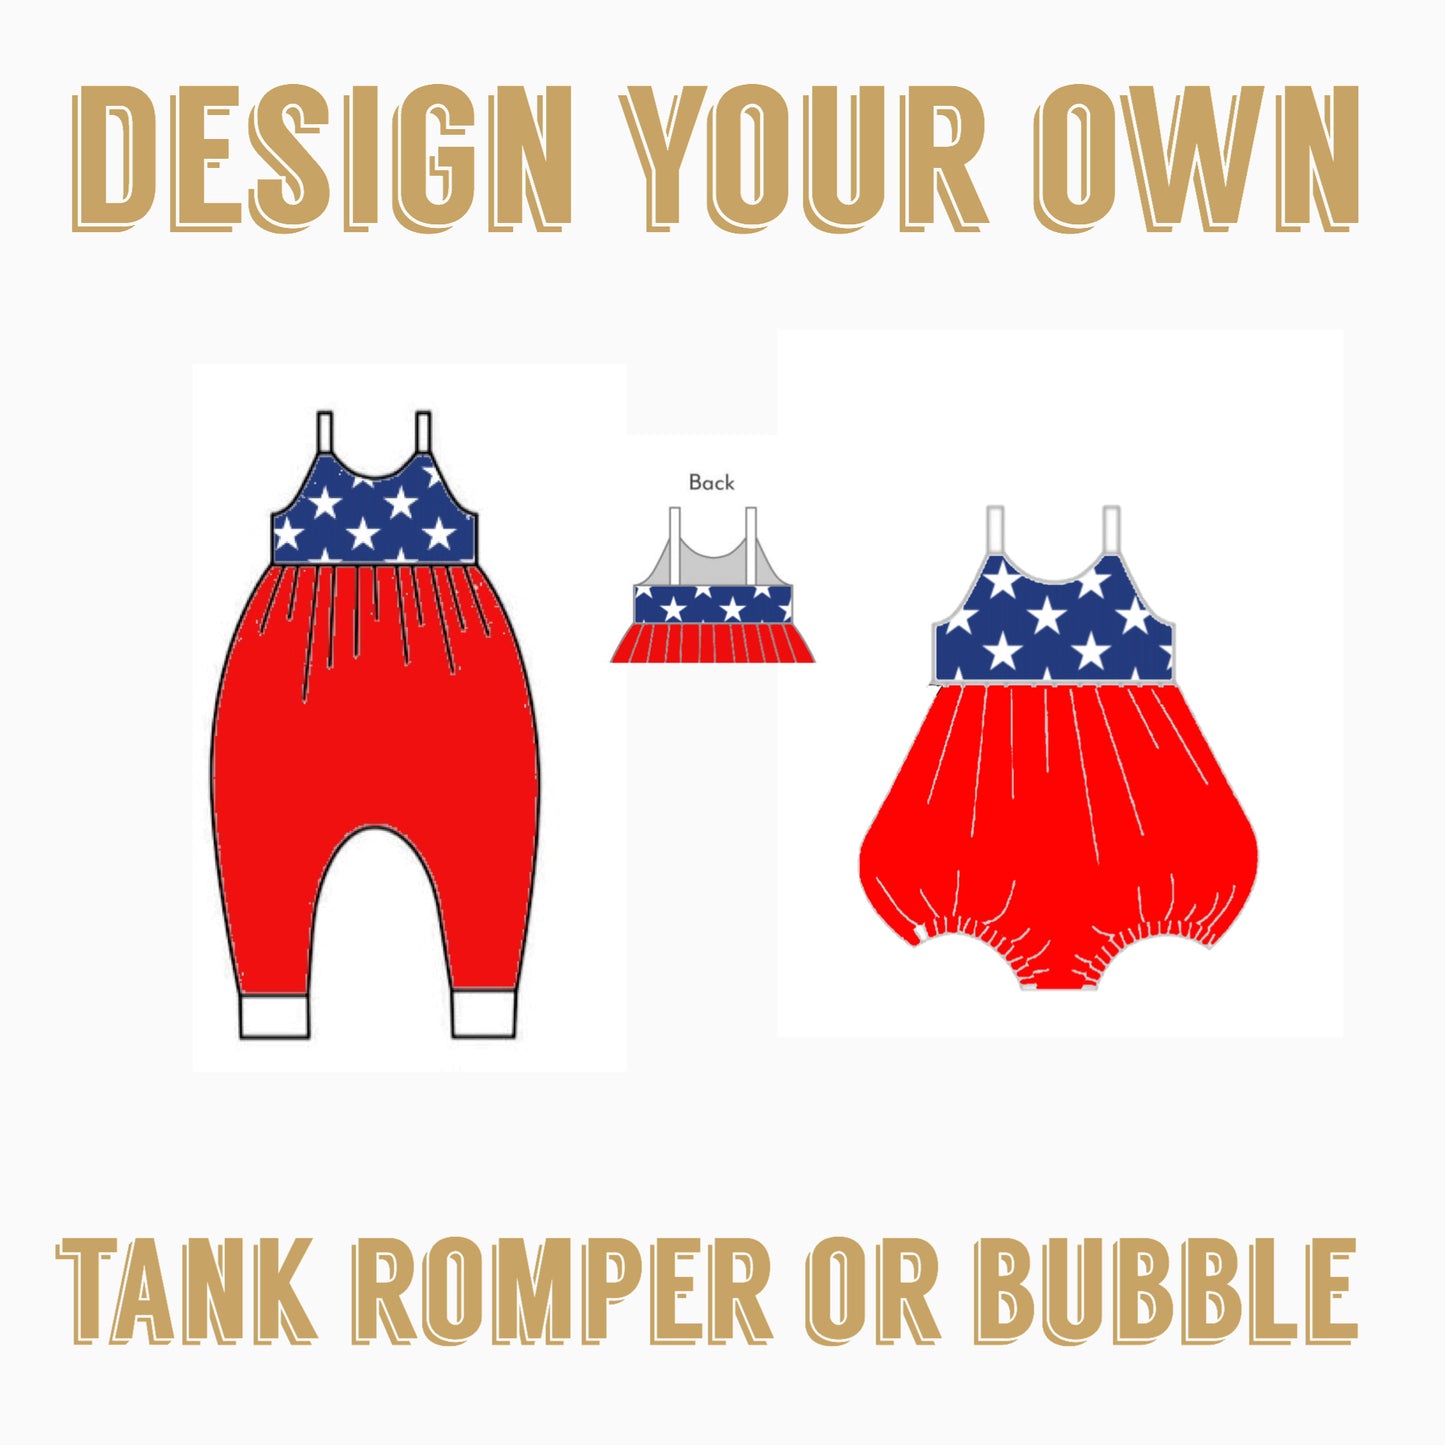 Design your own | Bubble romper